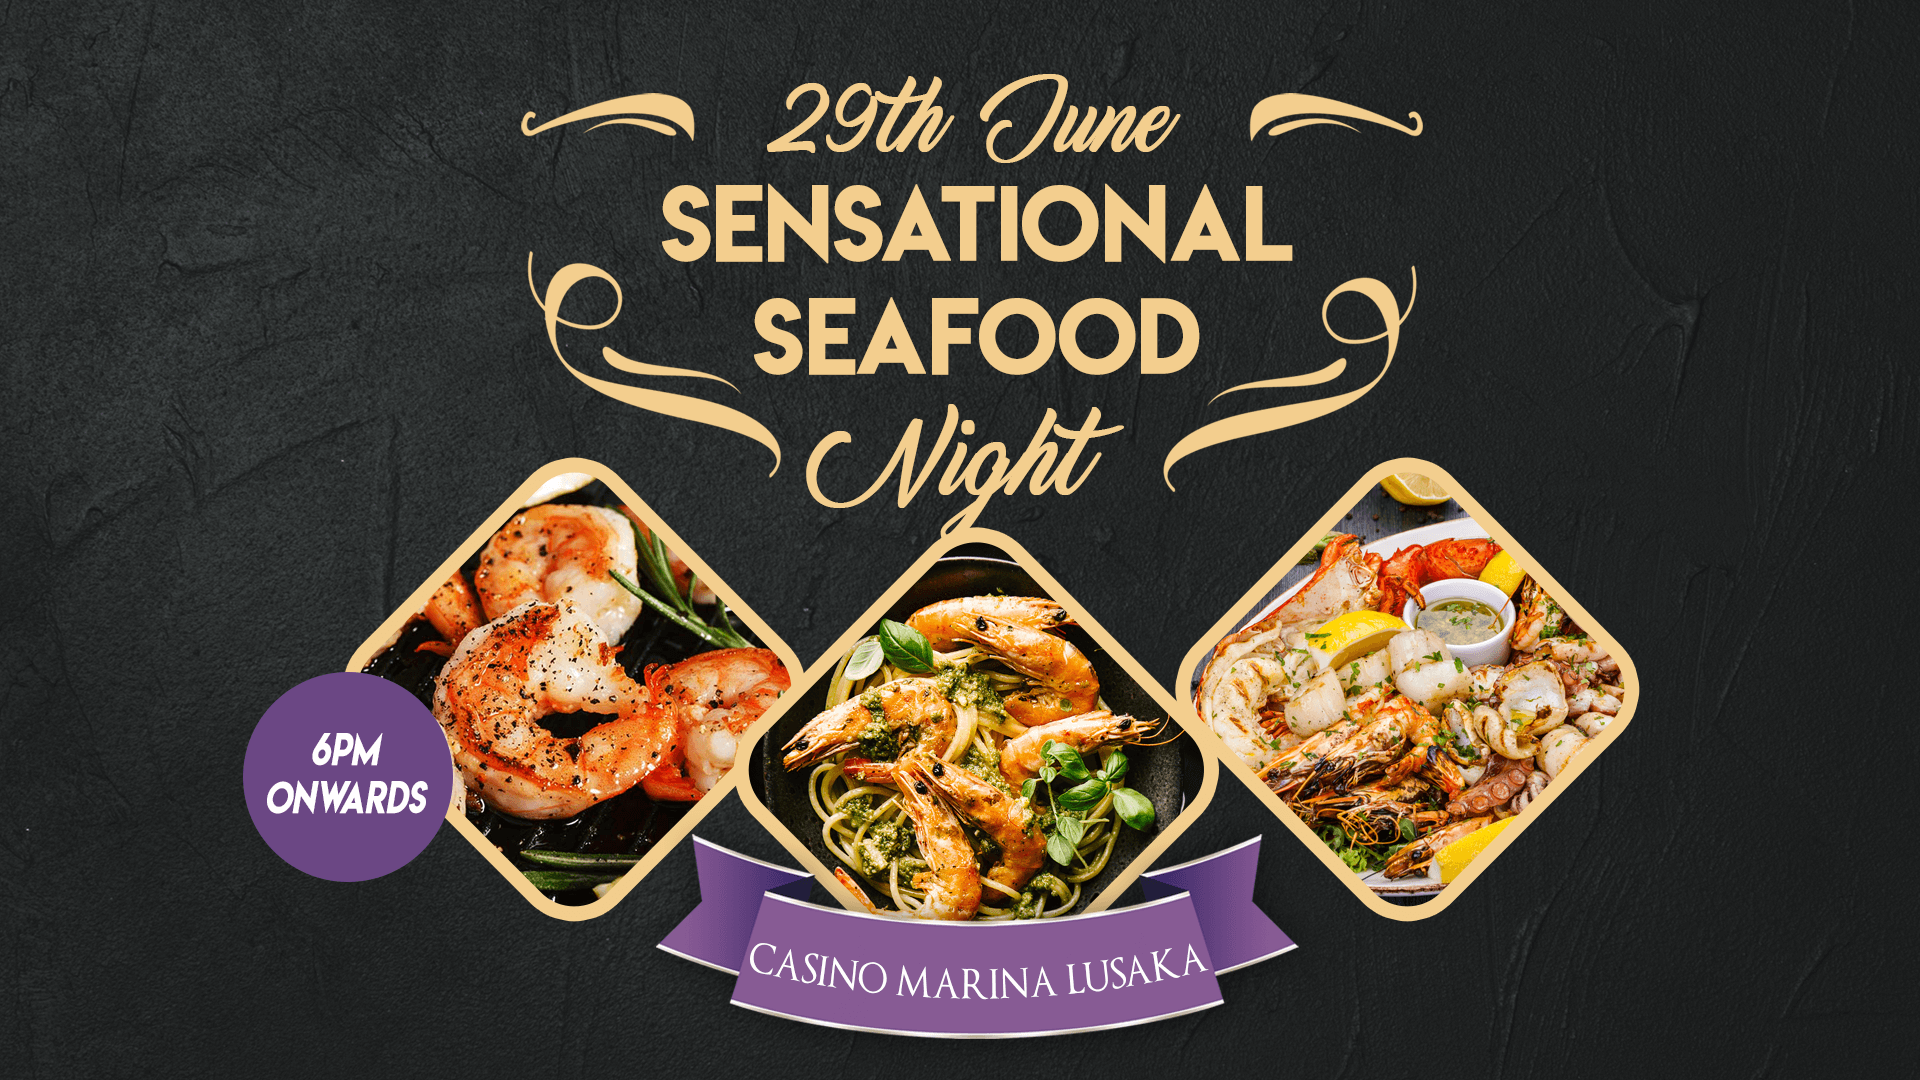 Sensational seafood night